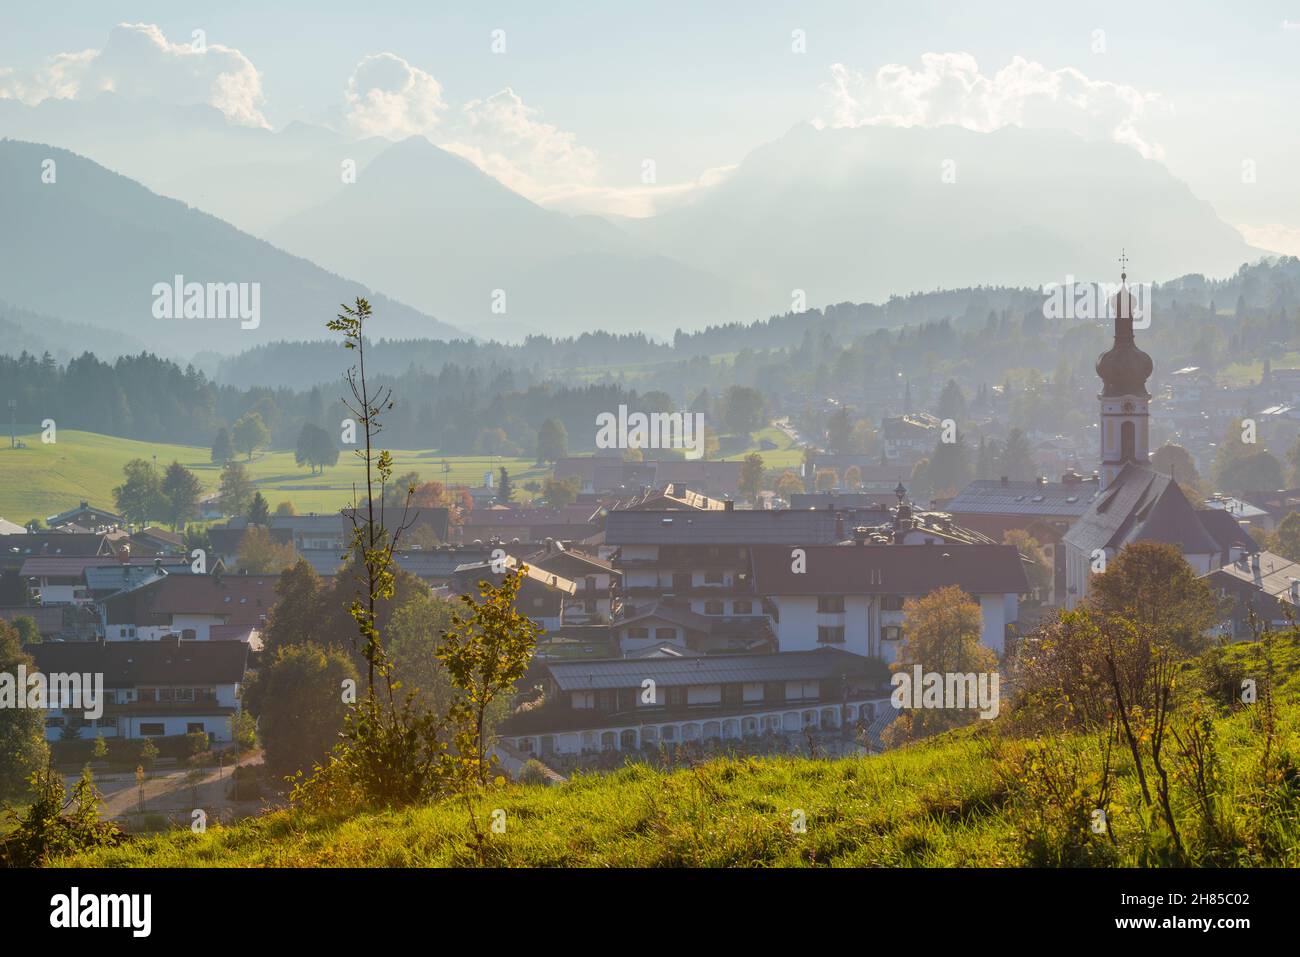 View over Reit im Winkl, Chiemgau region, Upper Bavaria, Southern Germany, Europe Stock Photo